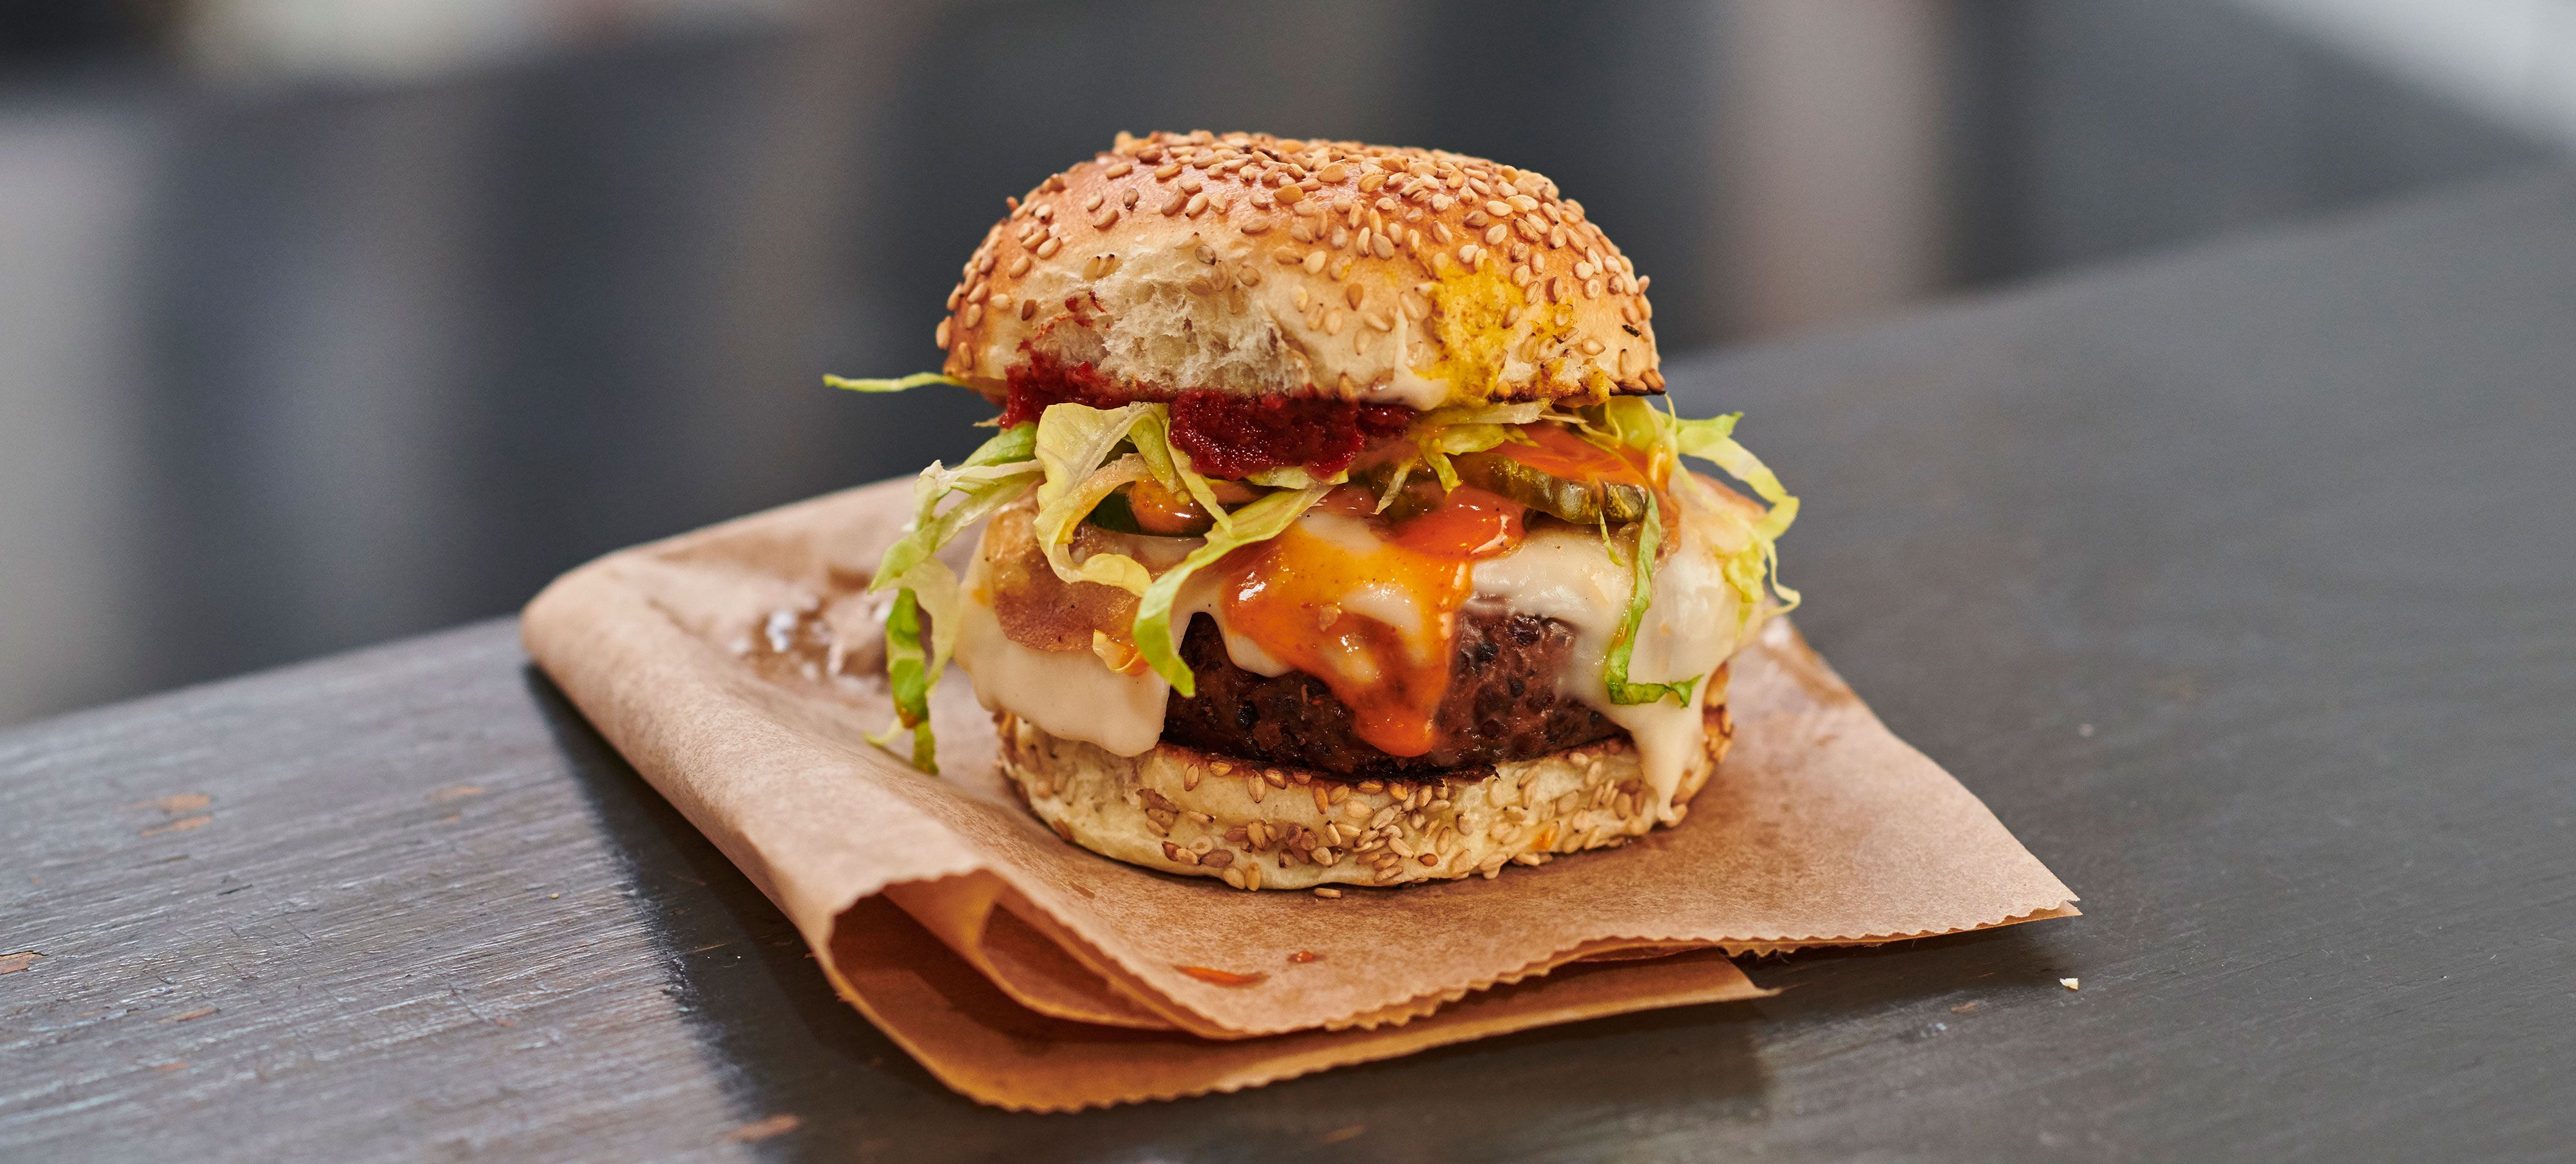 Best Veggie Burger 2021 The Absolute Best Veggie Burgers in NYC